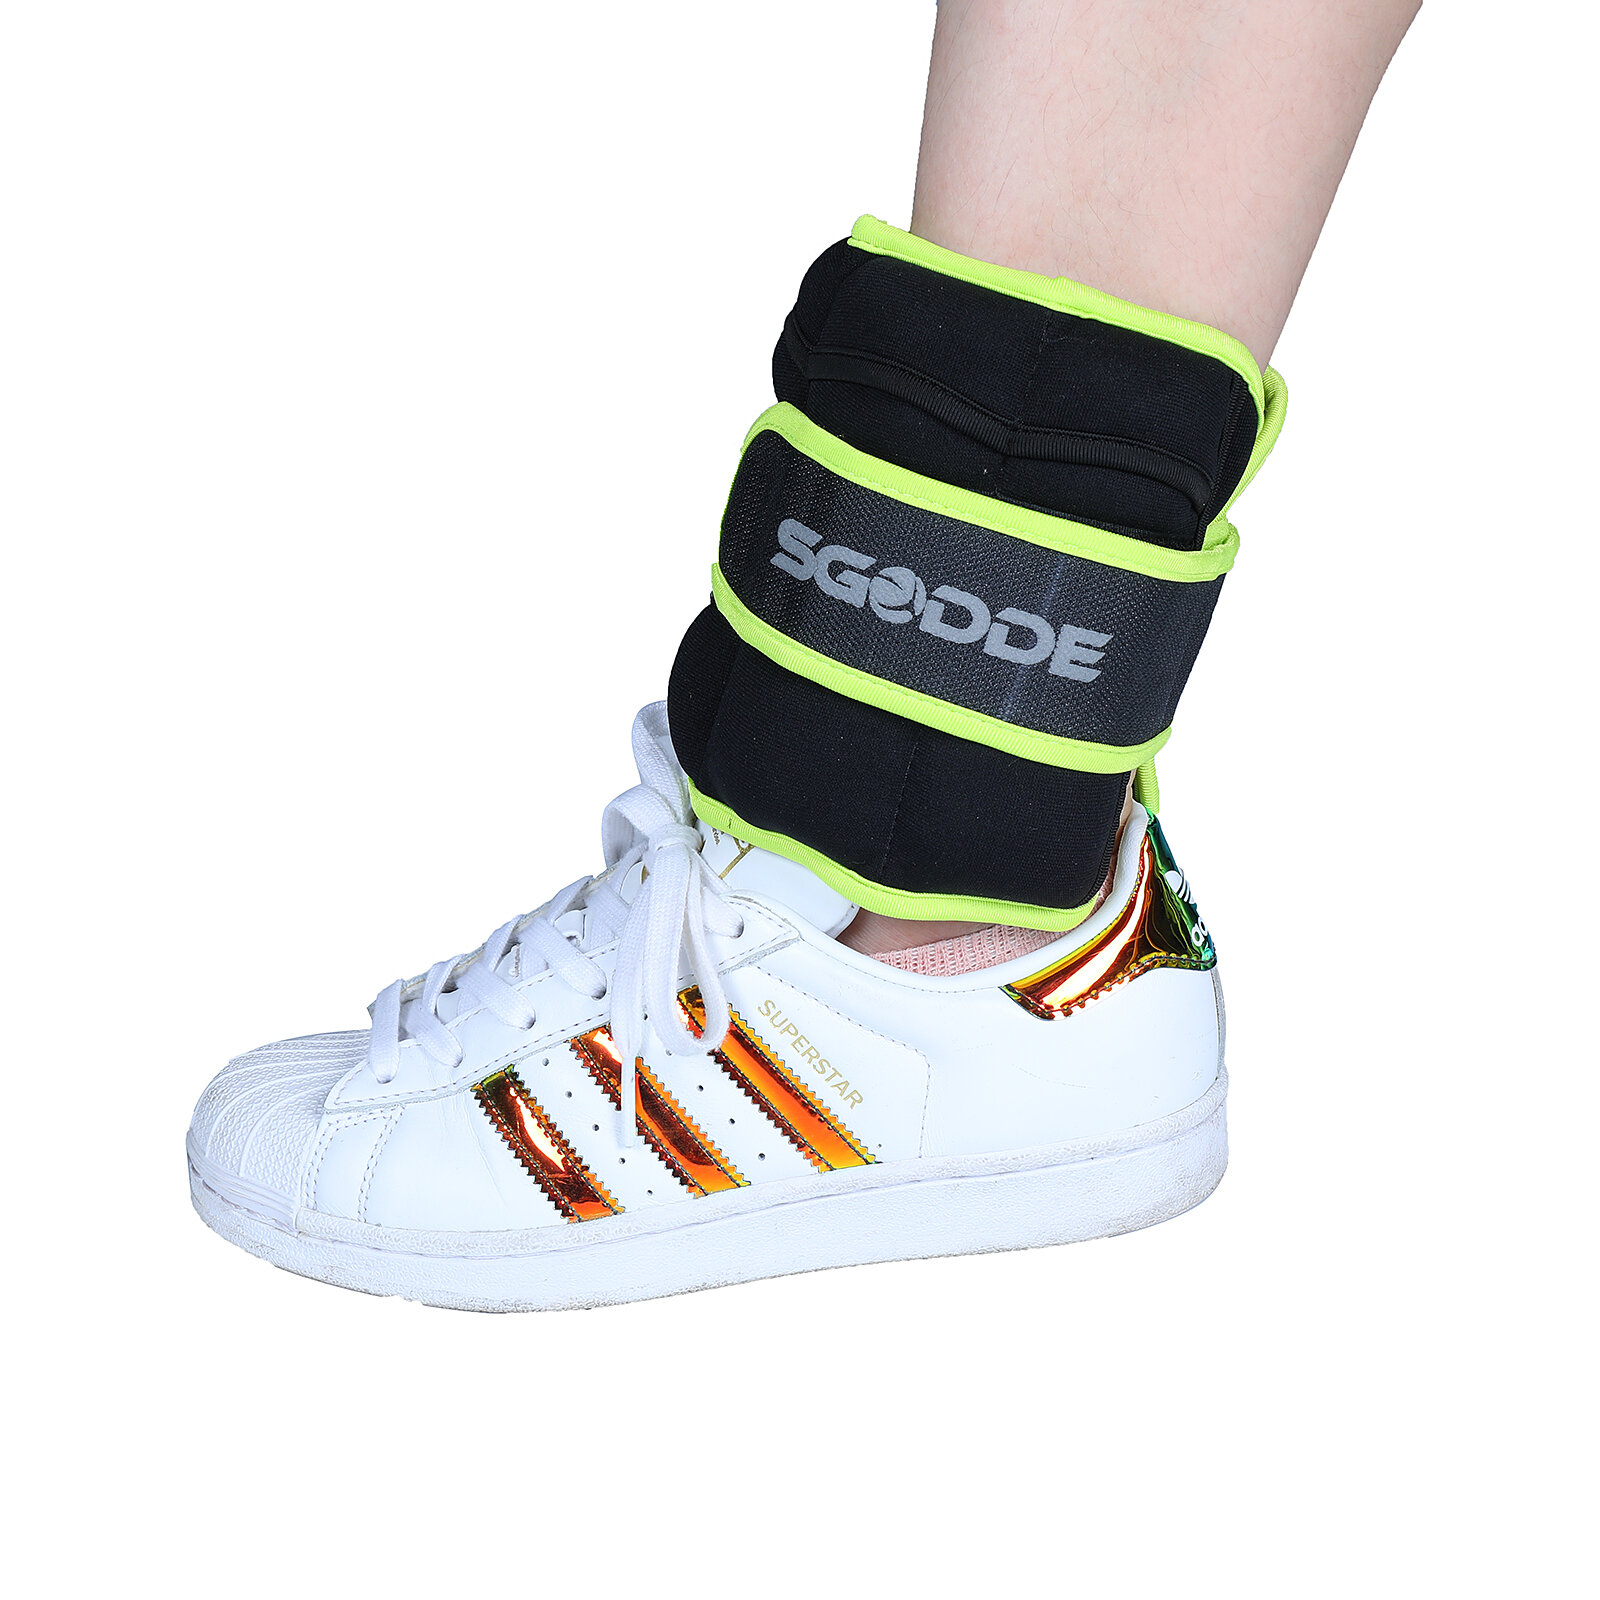 SGODDE 4/7/10LB Adjustable Ankle Weights Arm Leg Strength Training Straps Walking Running Pilates Cardio Exercises